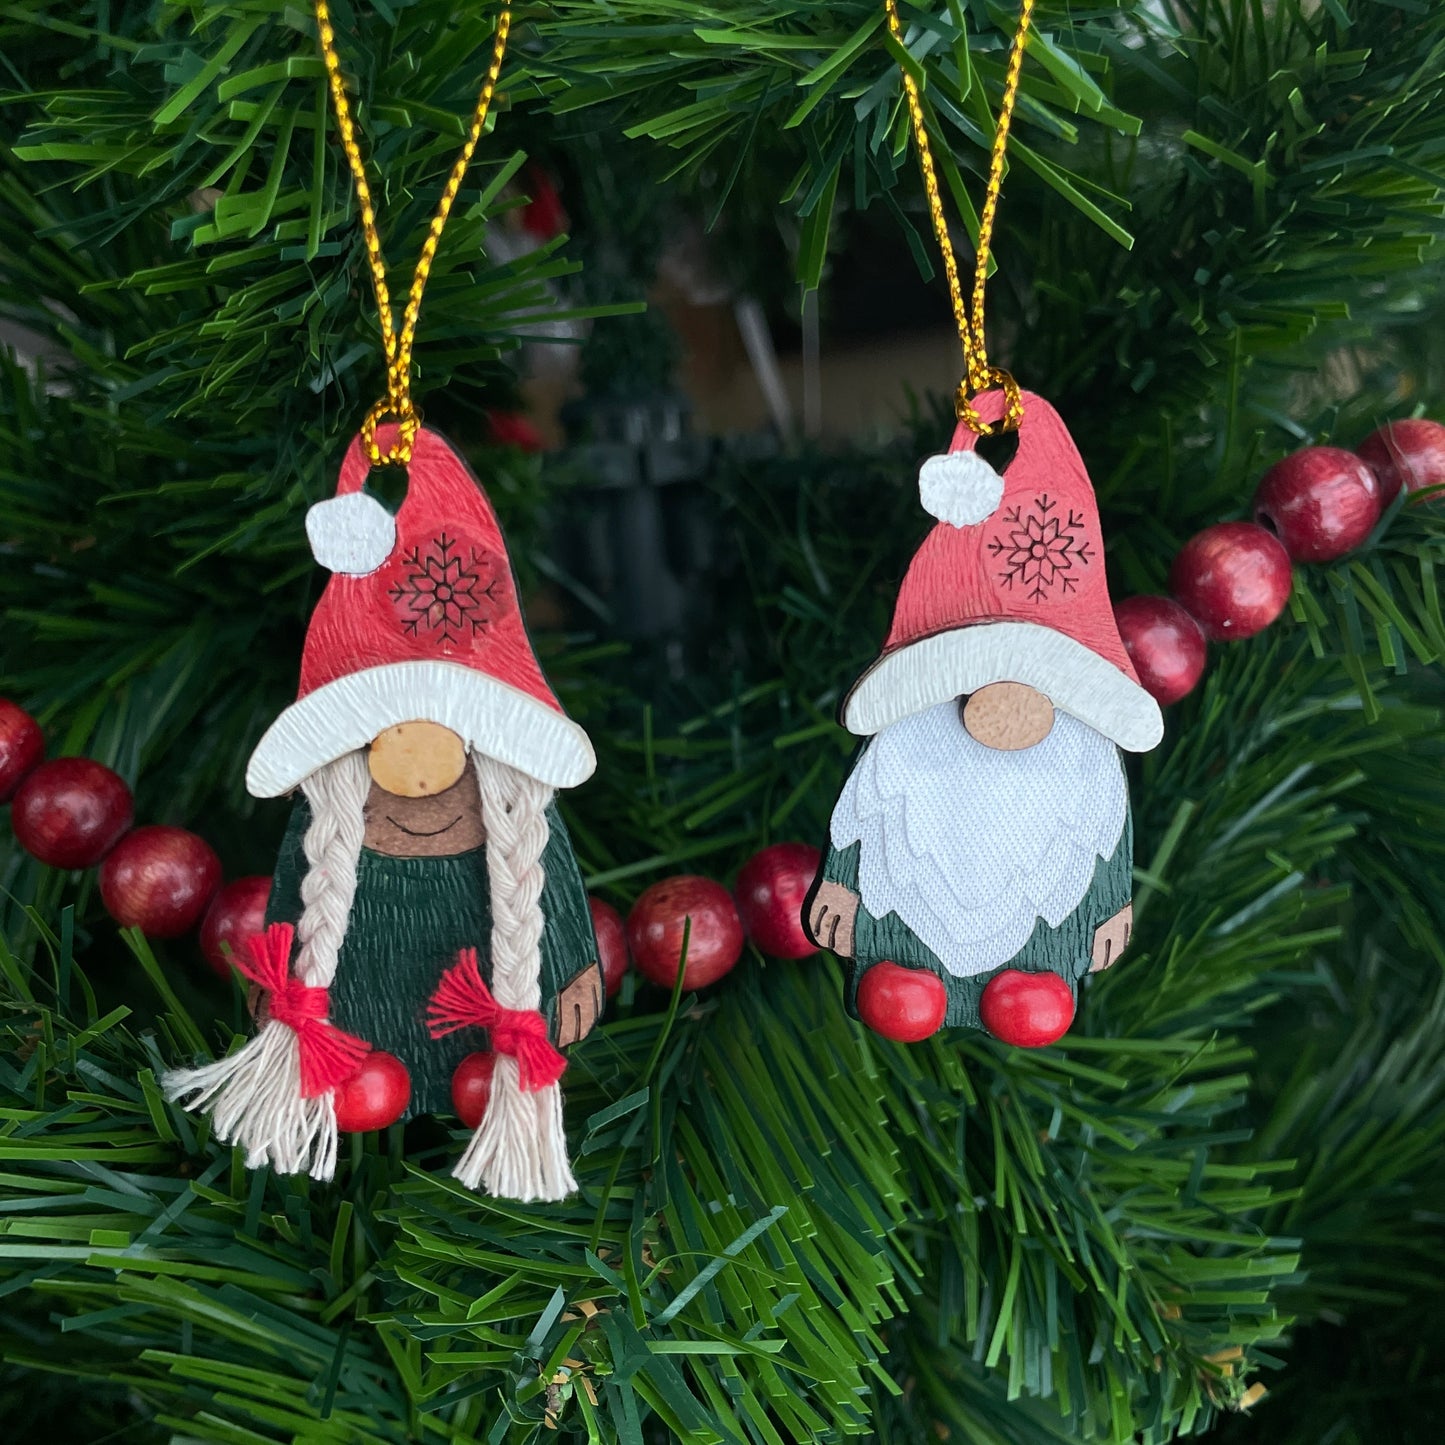 Mr Gnome Holiday Ornament